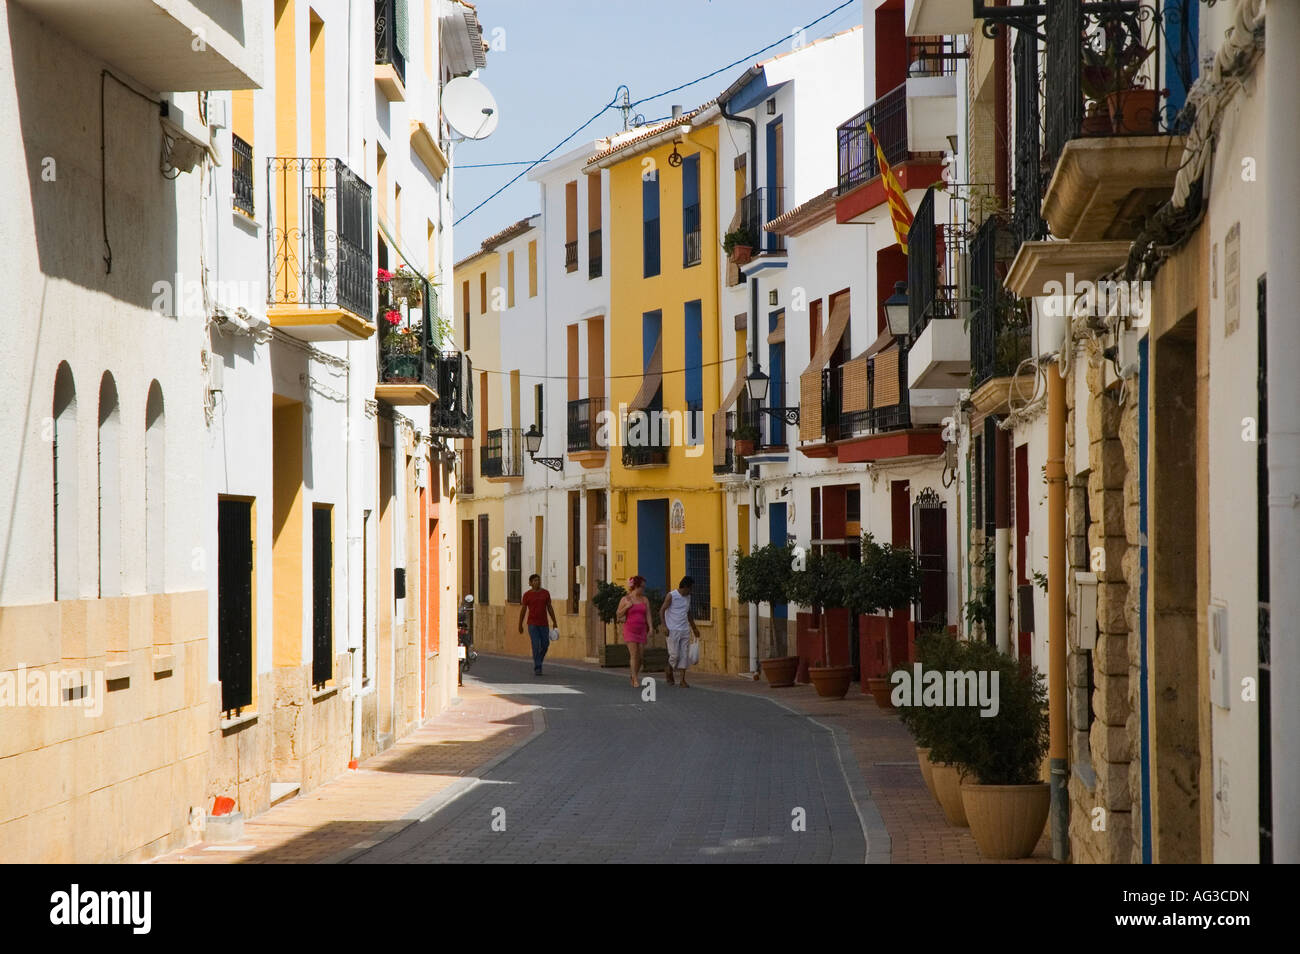 A street scene in the town of La Nucia, Spain Stock Photo